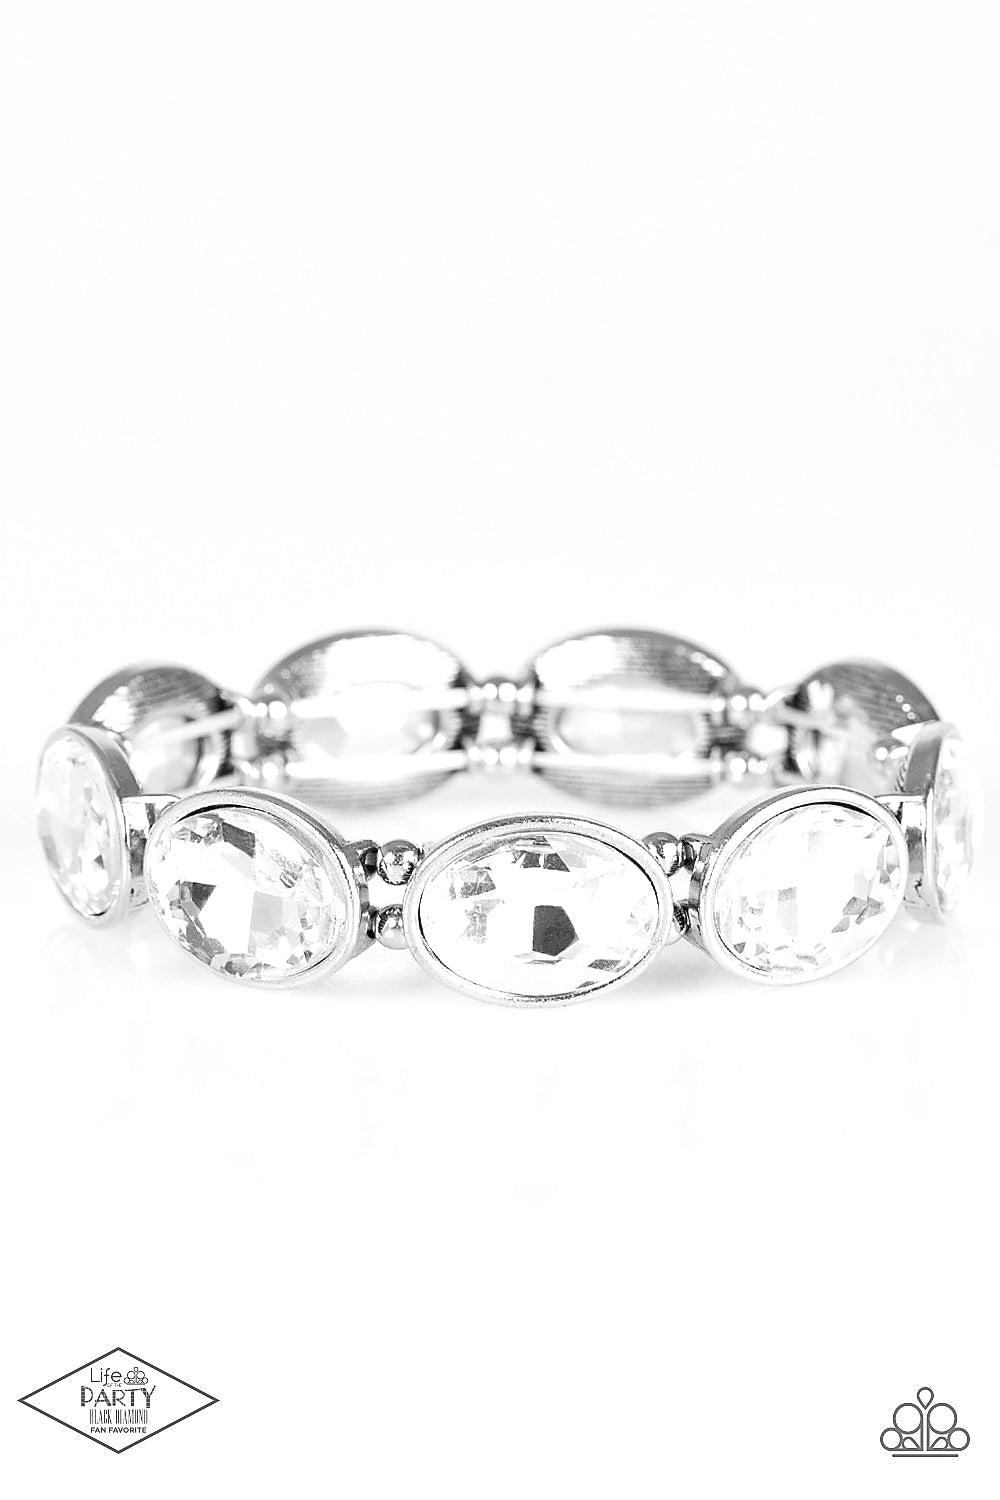 DIVA In Disguise White Rhinestone Bracelet - Paparazzi Accessories- lightbox - CarasShop.com - $5 Jewelry by Cara Jewels